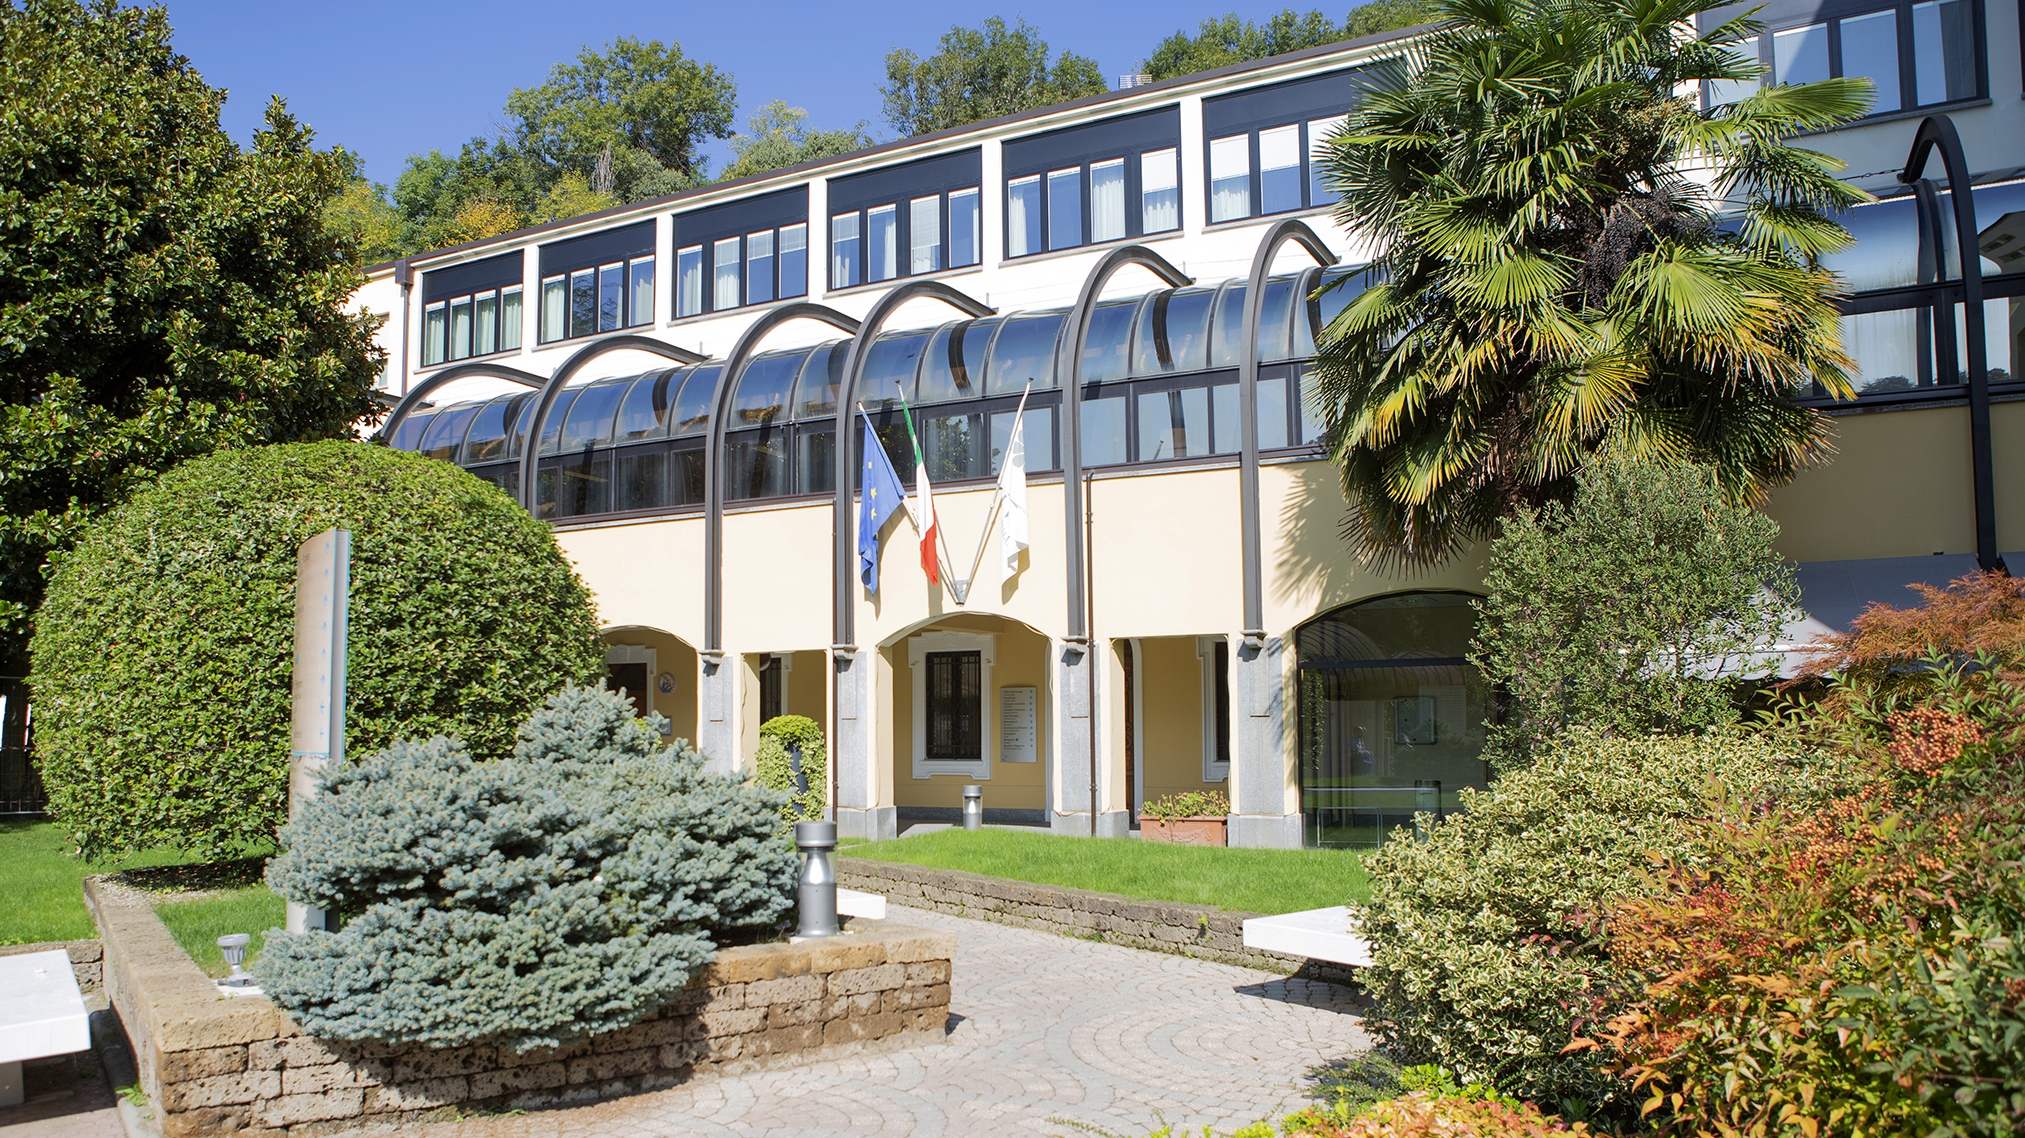 Maria Pia Hospital diventa Covid Hospital per la città di Torino